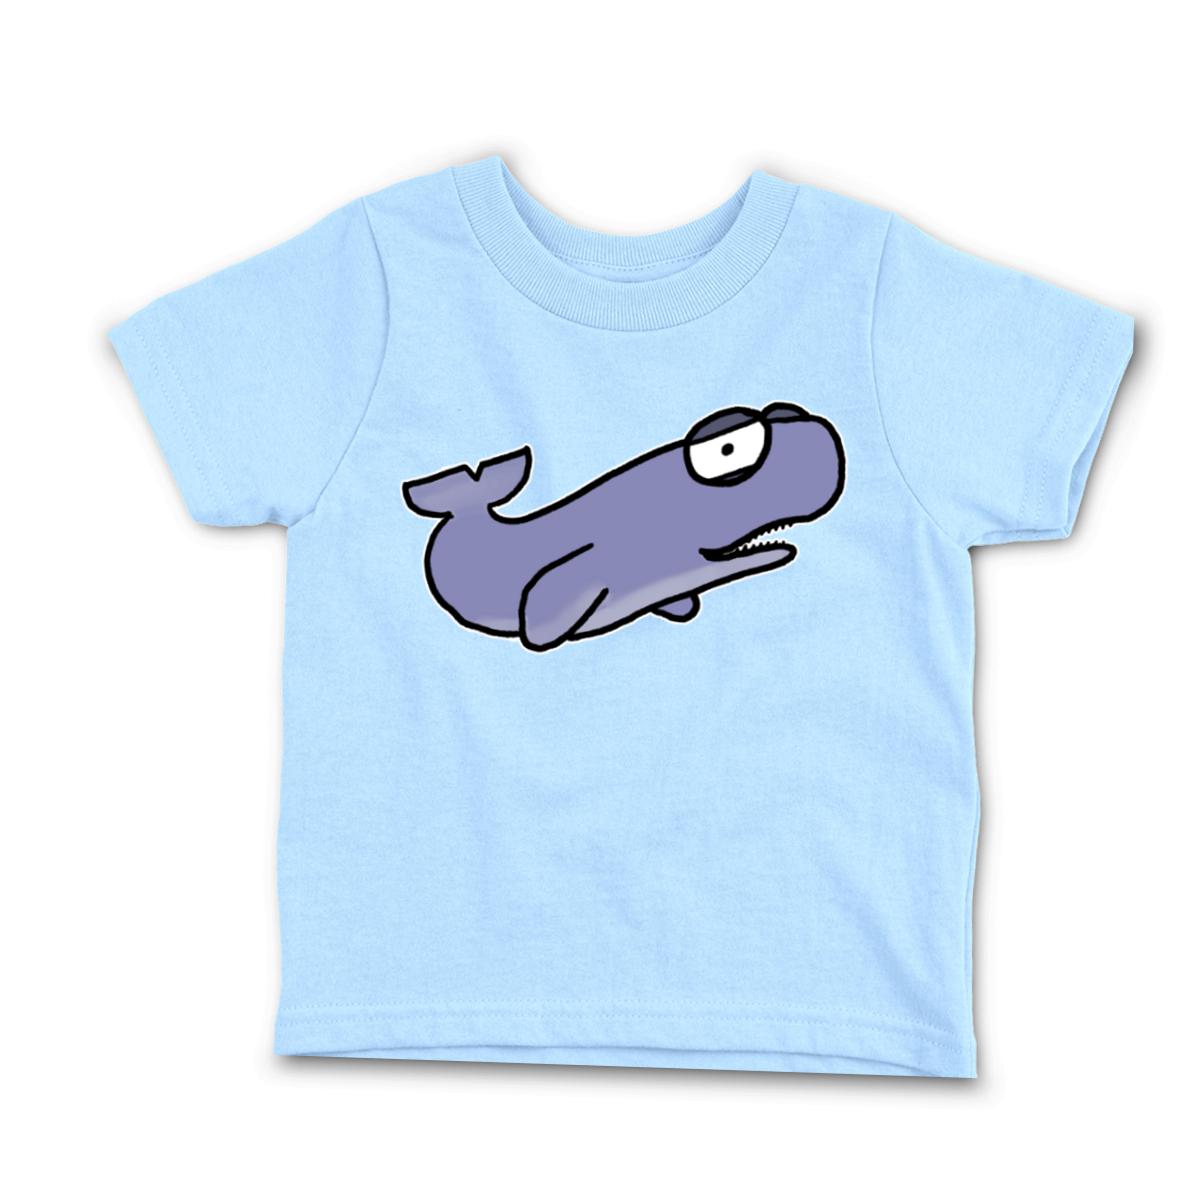 Sperm Whale Infant Tee 12M light-blue